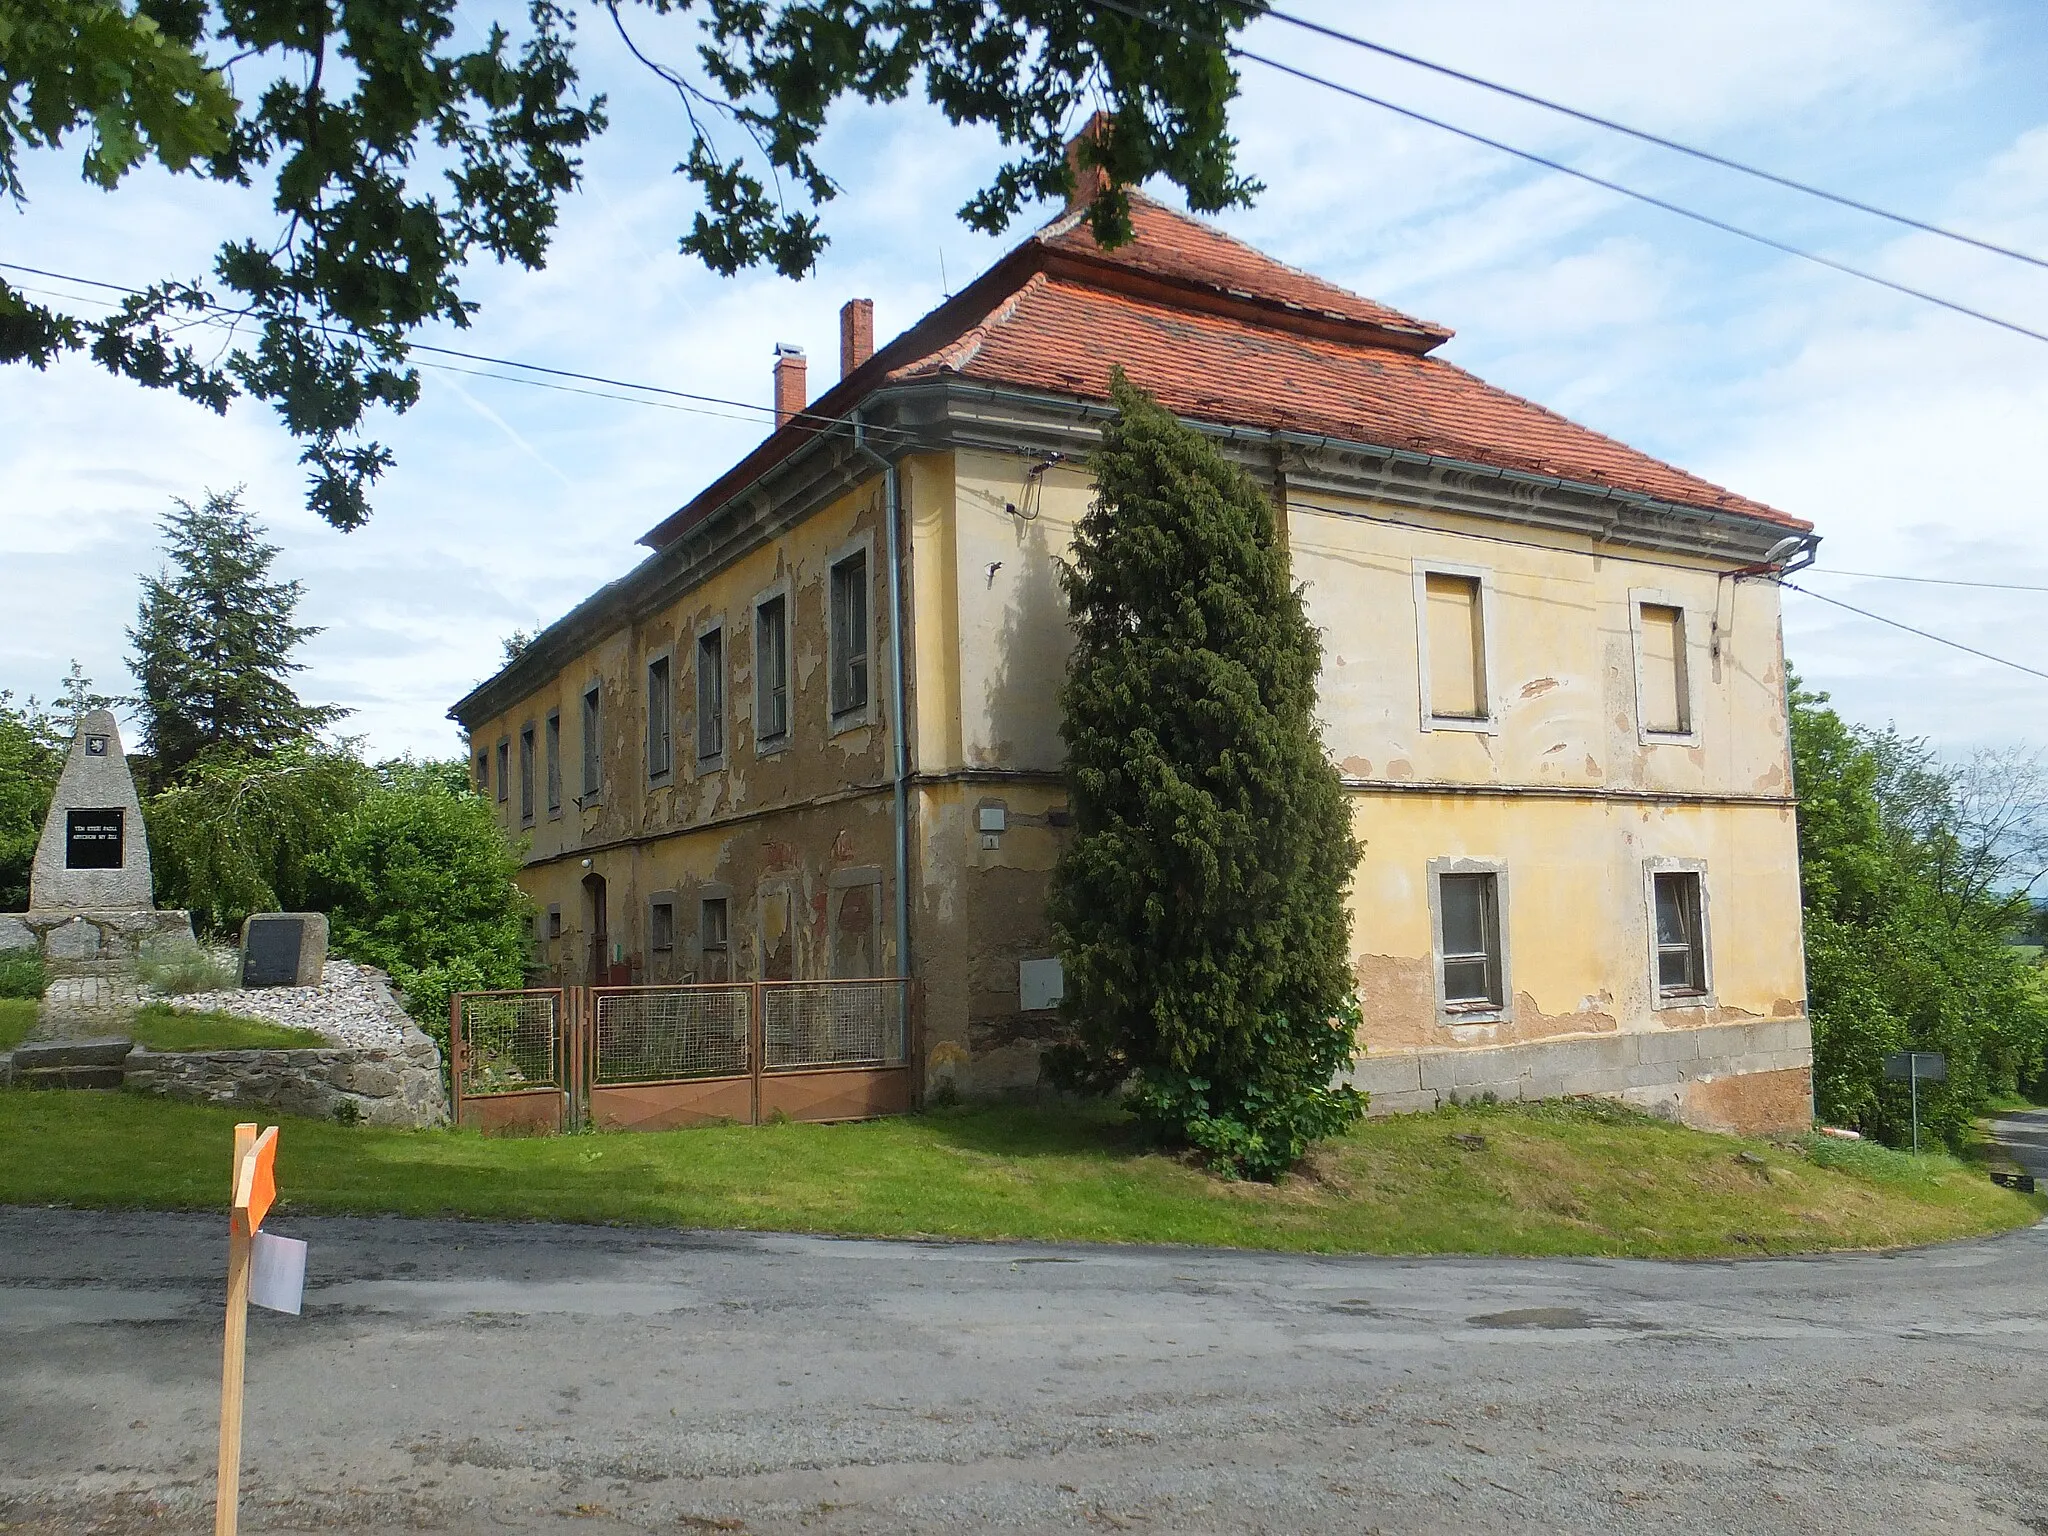 Photo showing: The presbytery in Skapce